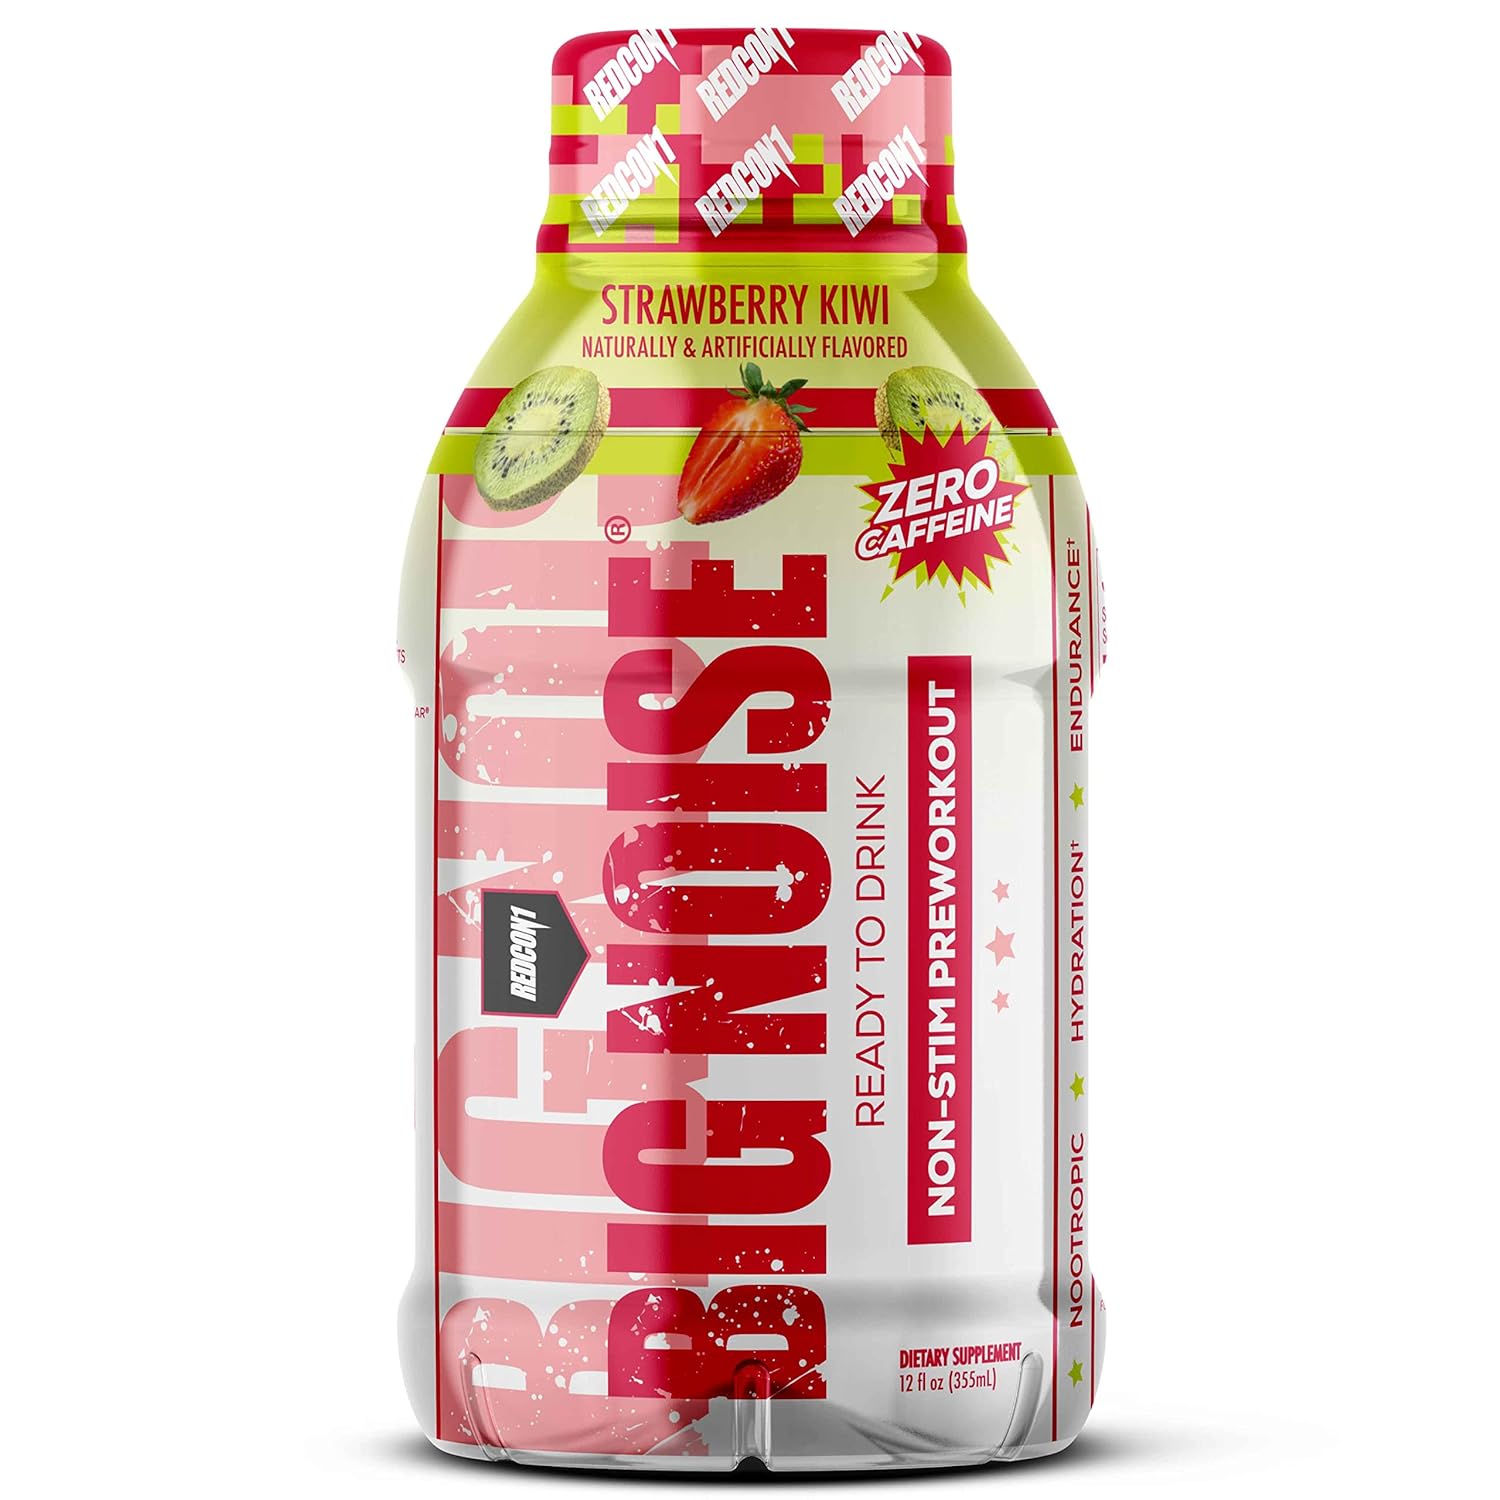 REDCON1 Big Noise RTD Pre Workout Drink, Strawberry Kiwi - Caffeine-Fr